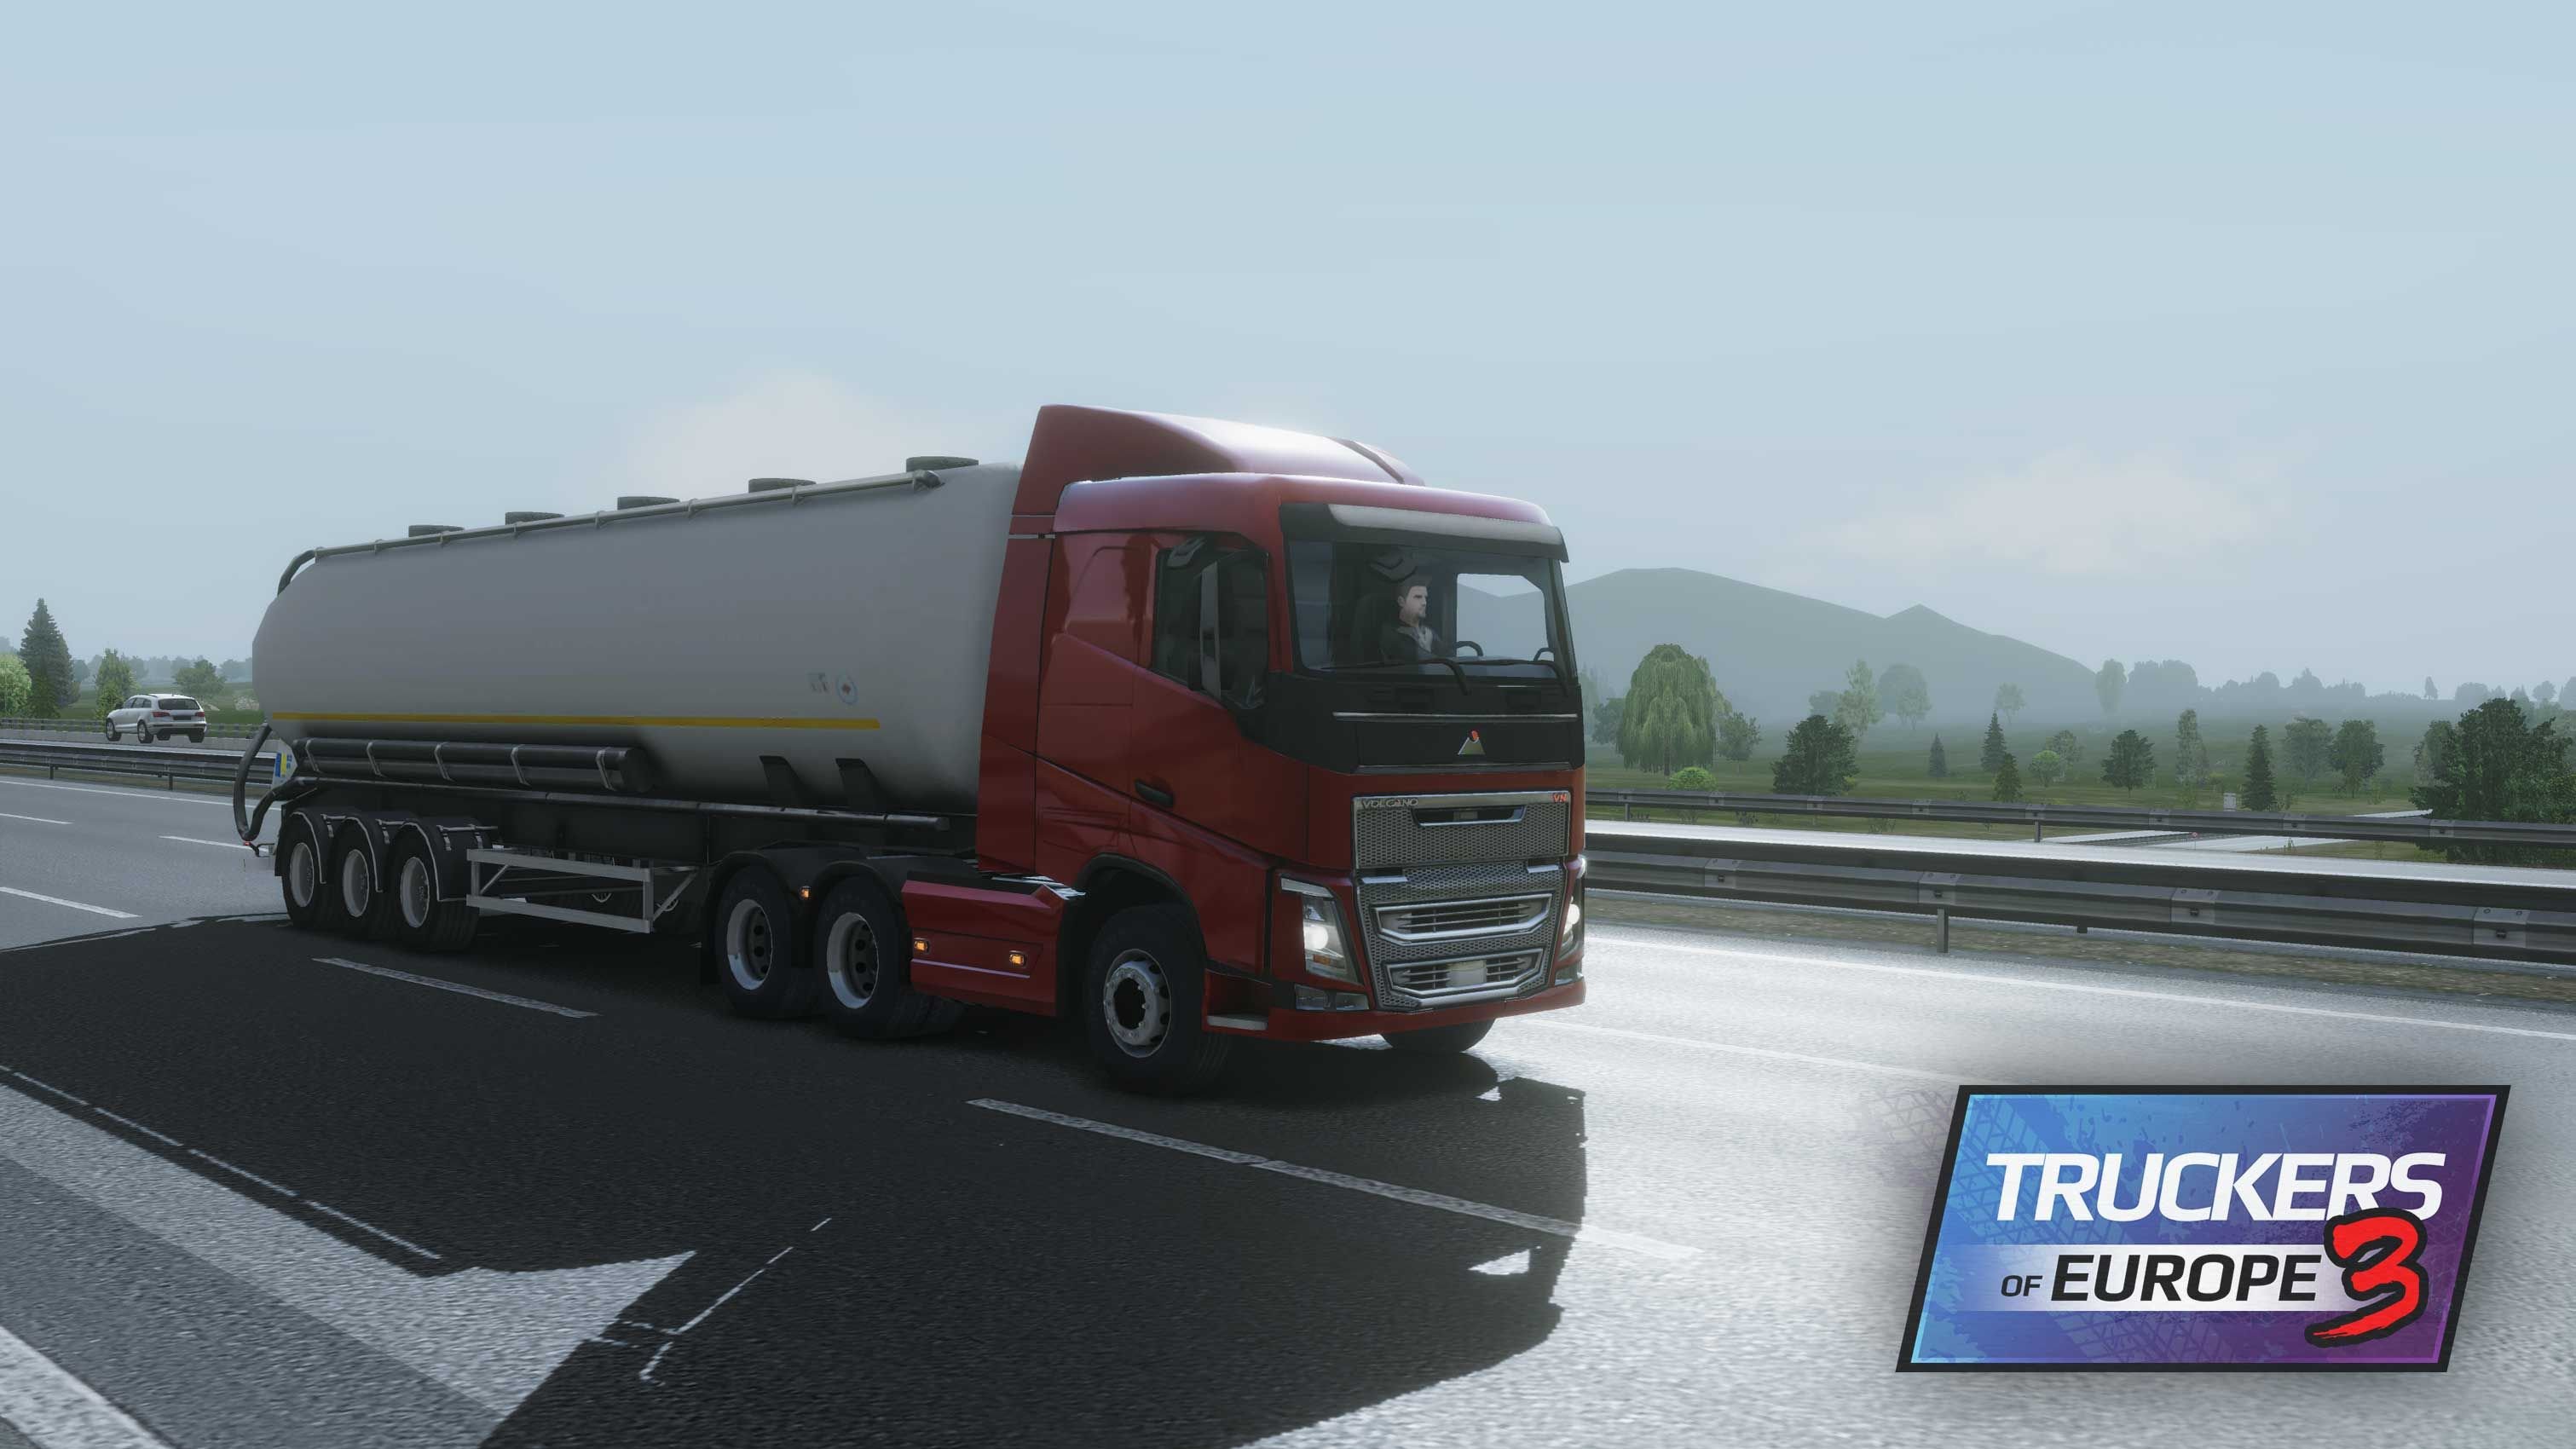 Игра тракерс оф европа. Truck of Europe 3. Trucker of Europe 3 русская версия. Truck Simulator Europe 3. Truckers of Europe 3 0.45.